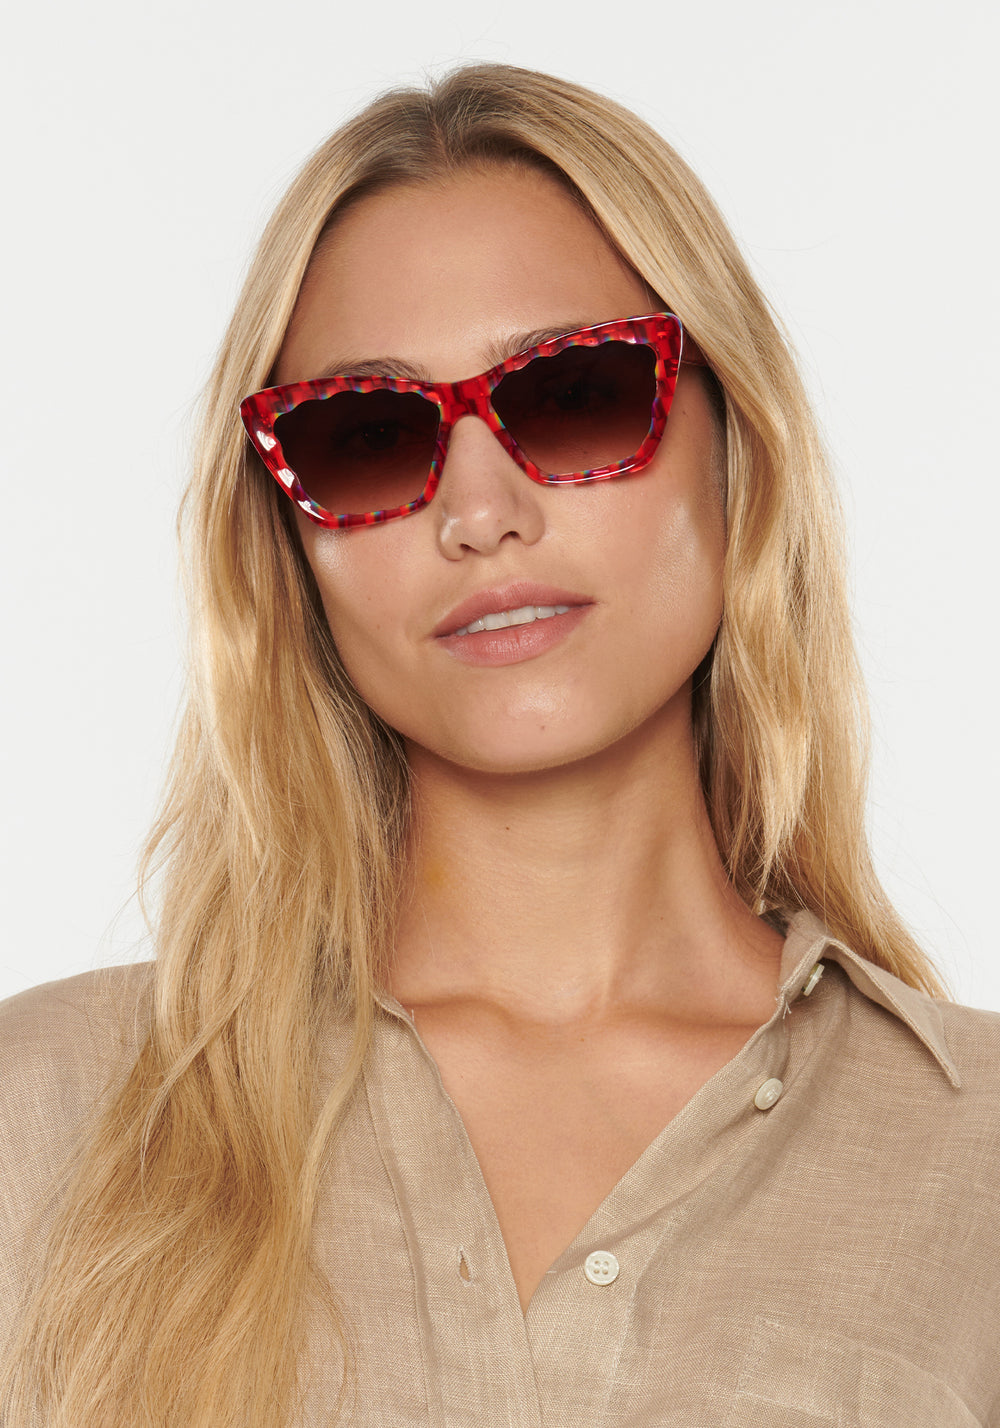 BRIGITTE | Cherry over Fierte Handcrafted, luxury red and rainbow checkered scalloped cat-eye KREWE sunglasses womens model | Model: Erica